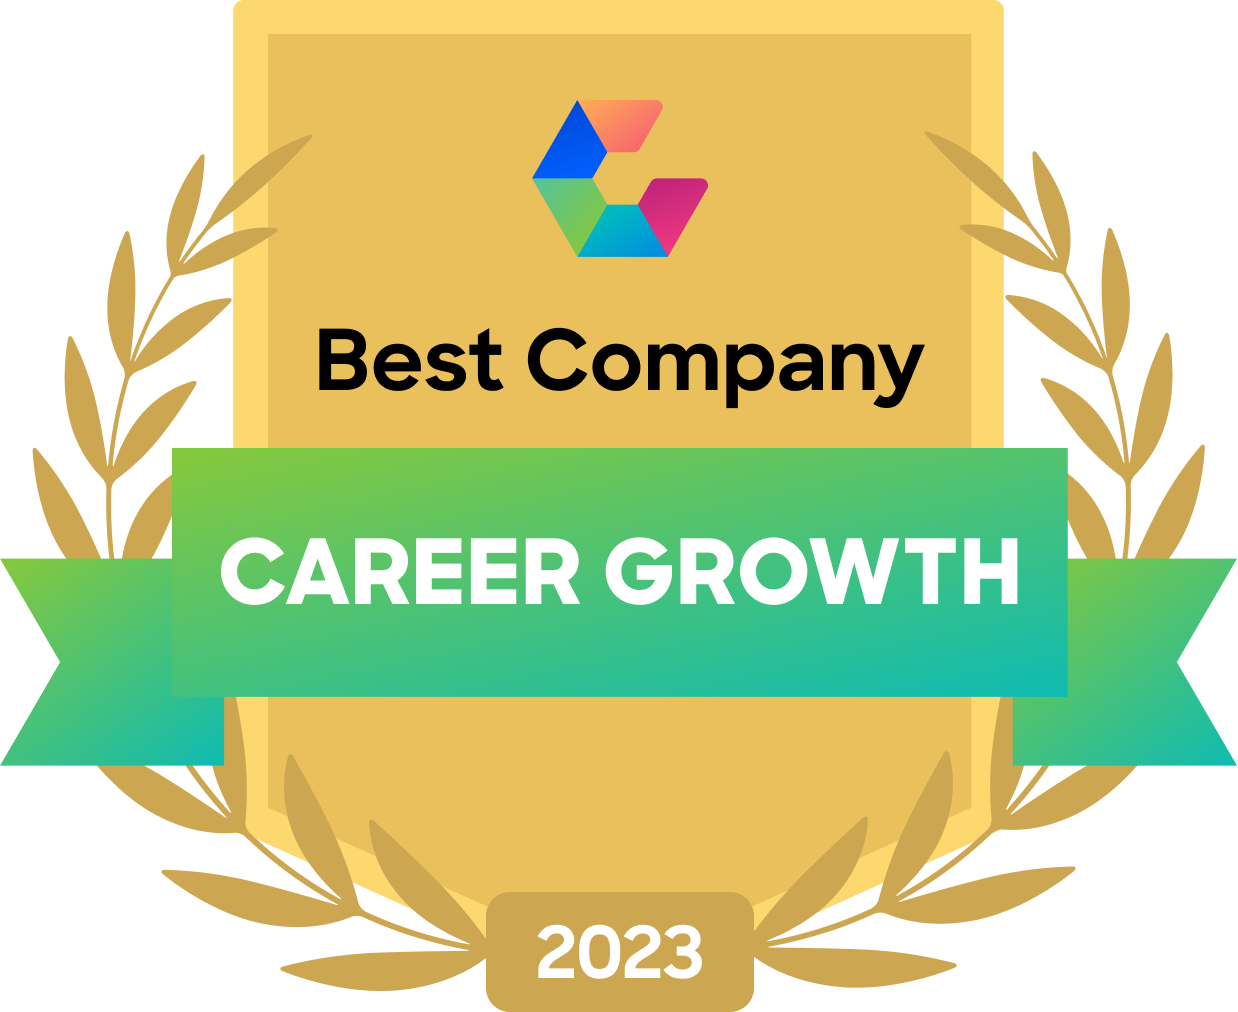 Best Company Career Growth 2023